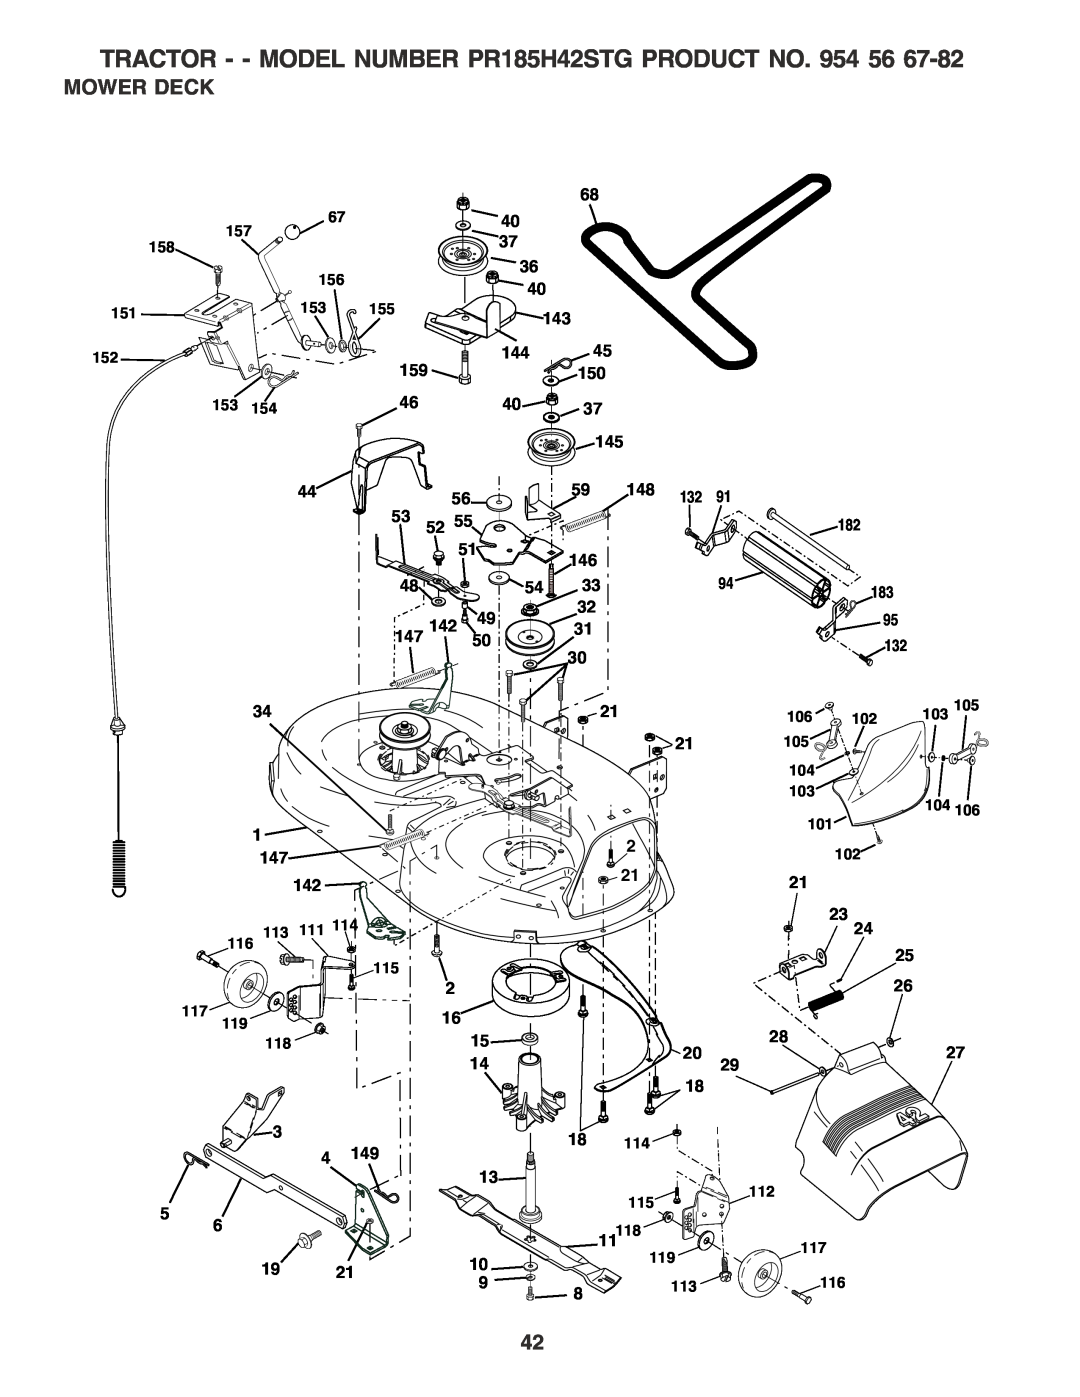 Poulan owner manual Mower Deck, TRACTOR - - MODEL NUMBER PR185H42STG PRODUCT NO 